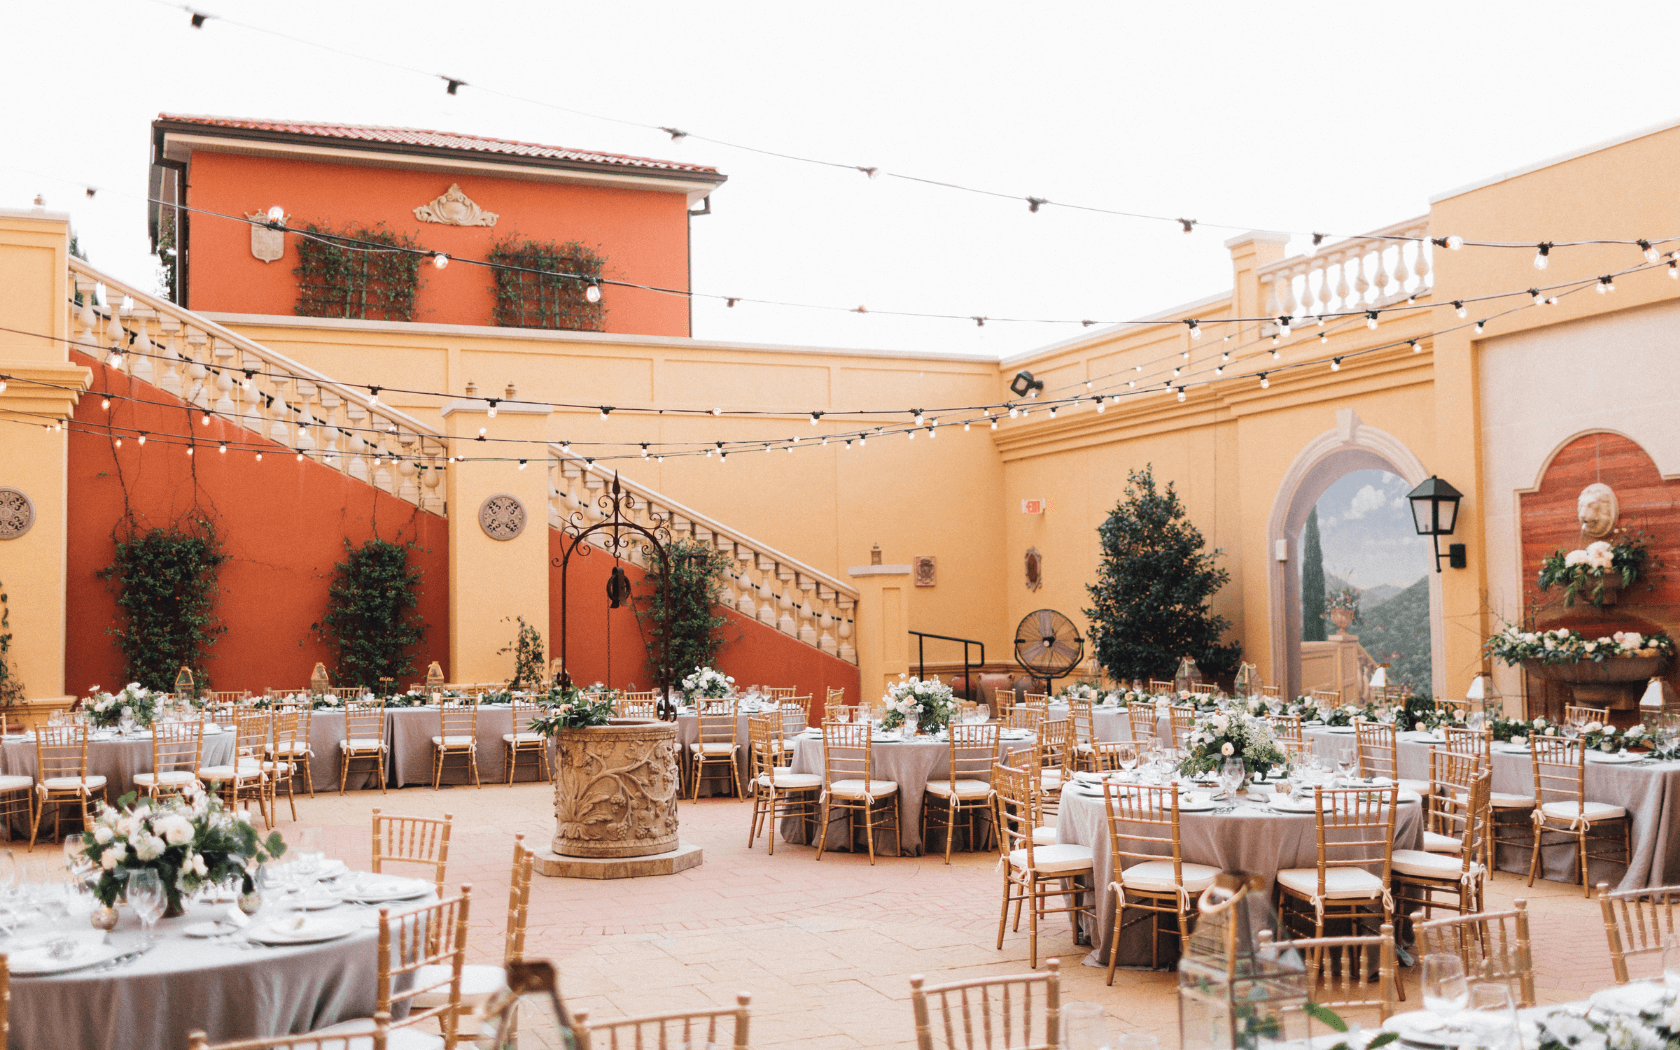 outdoor wedding reception set up in courtyard